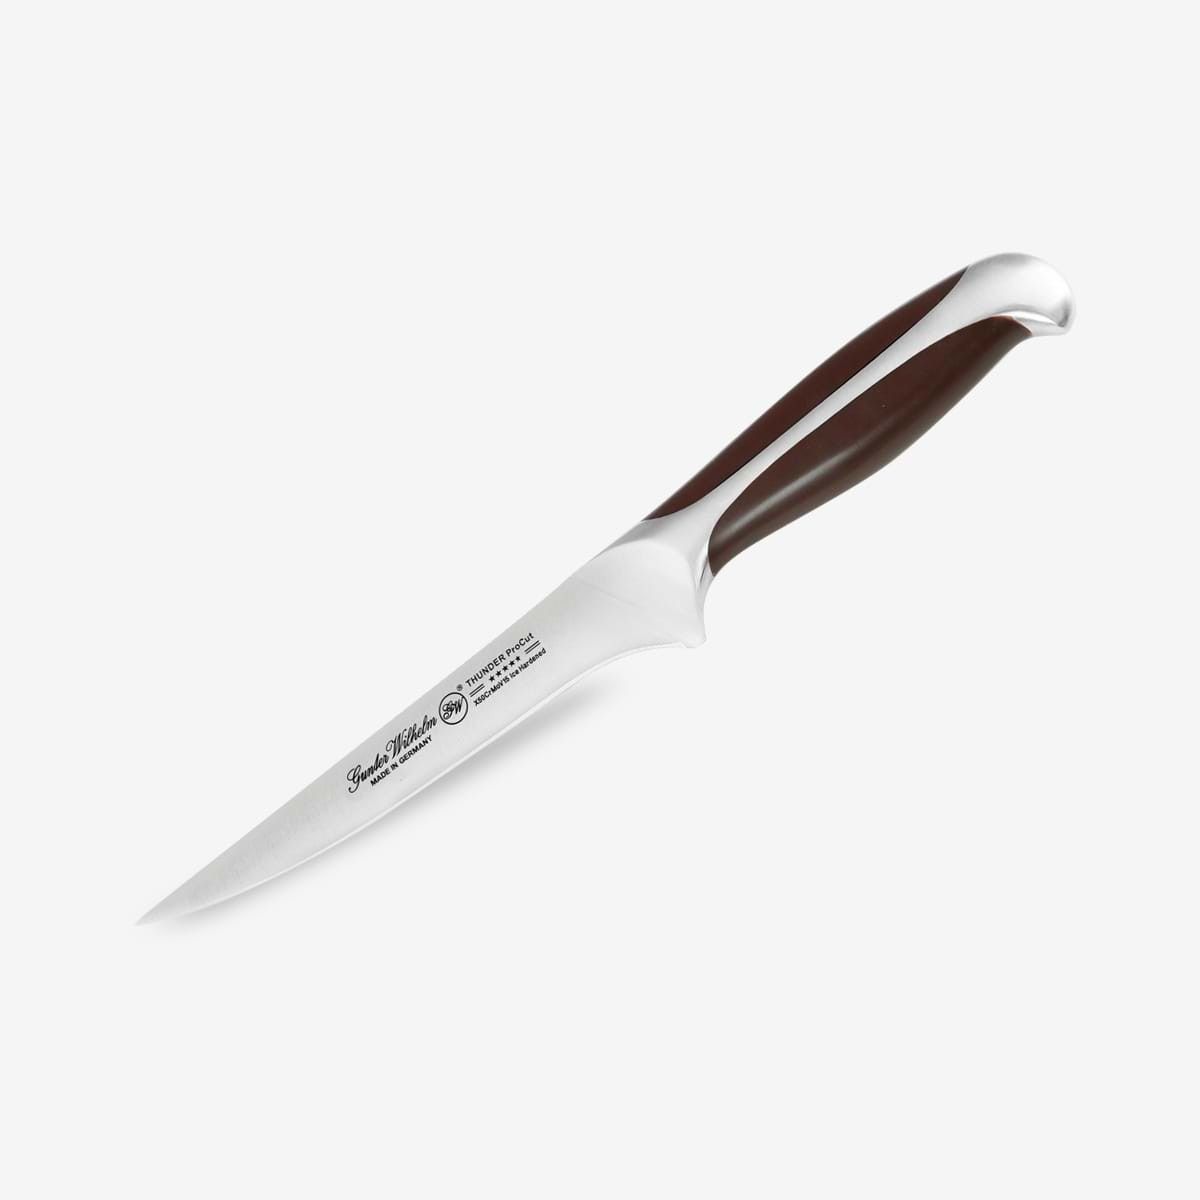 Gunter Wilhelm Thunder Boning knife, 6 Inch | Brownish ABS Handle SKU: 50-514-0306